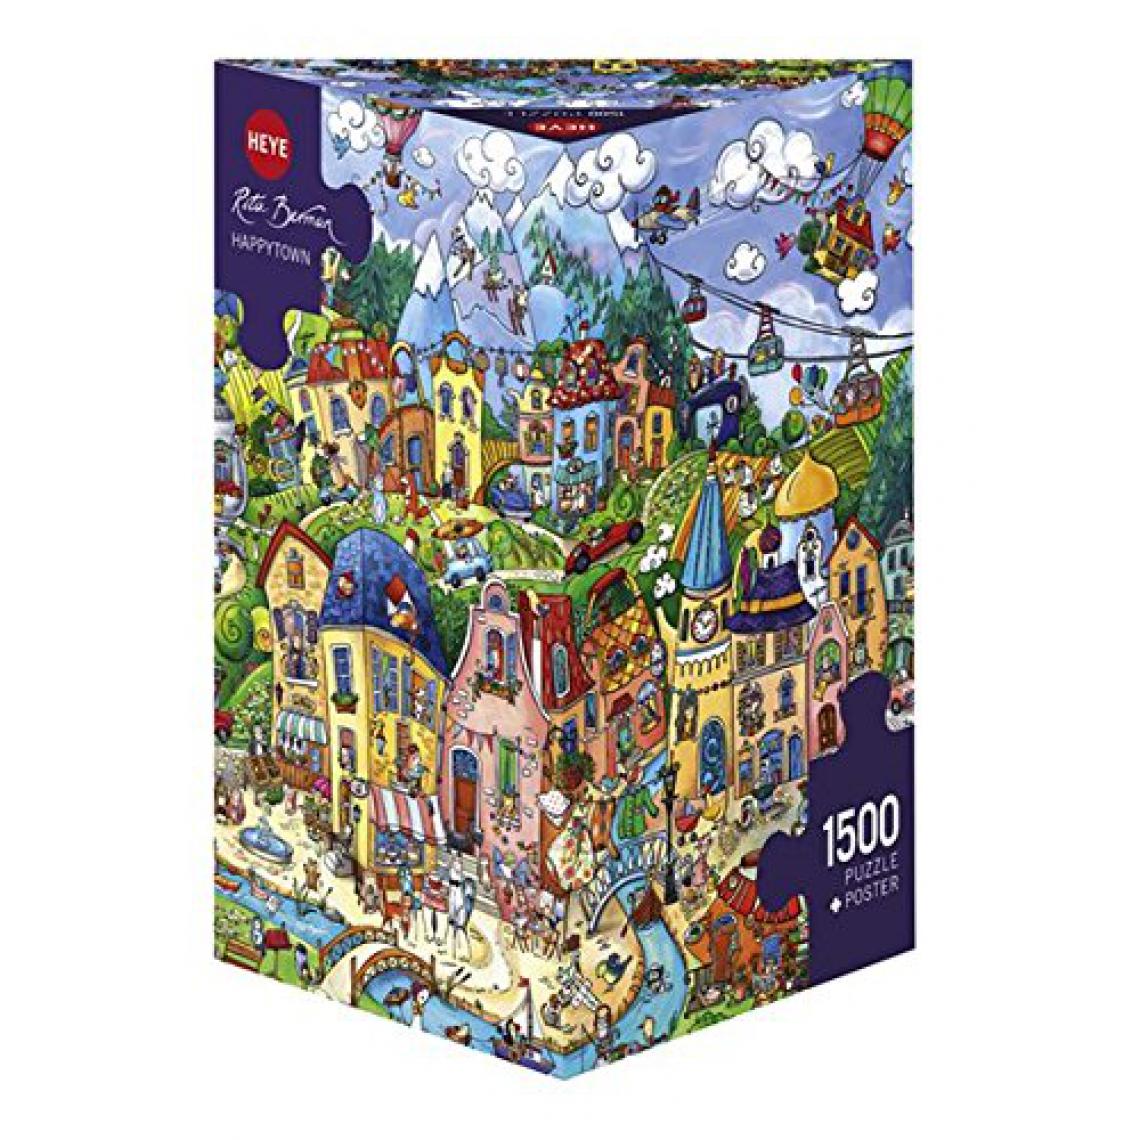 Heye - Heye- Puzzle Happytown 1500 Pièces, 29744, Multicolore - Animaux